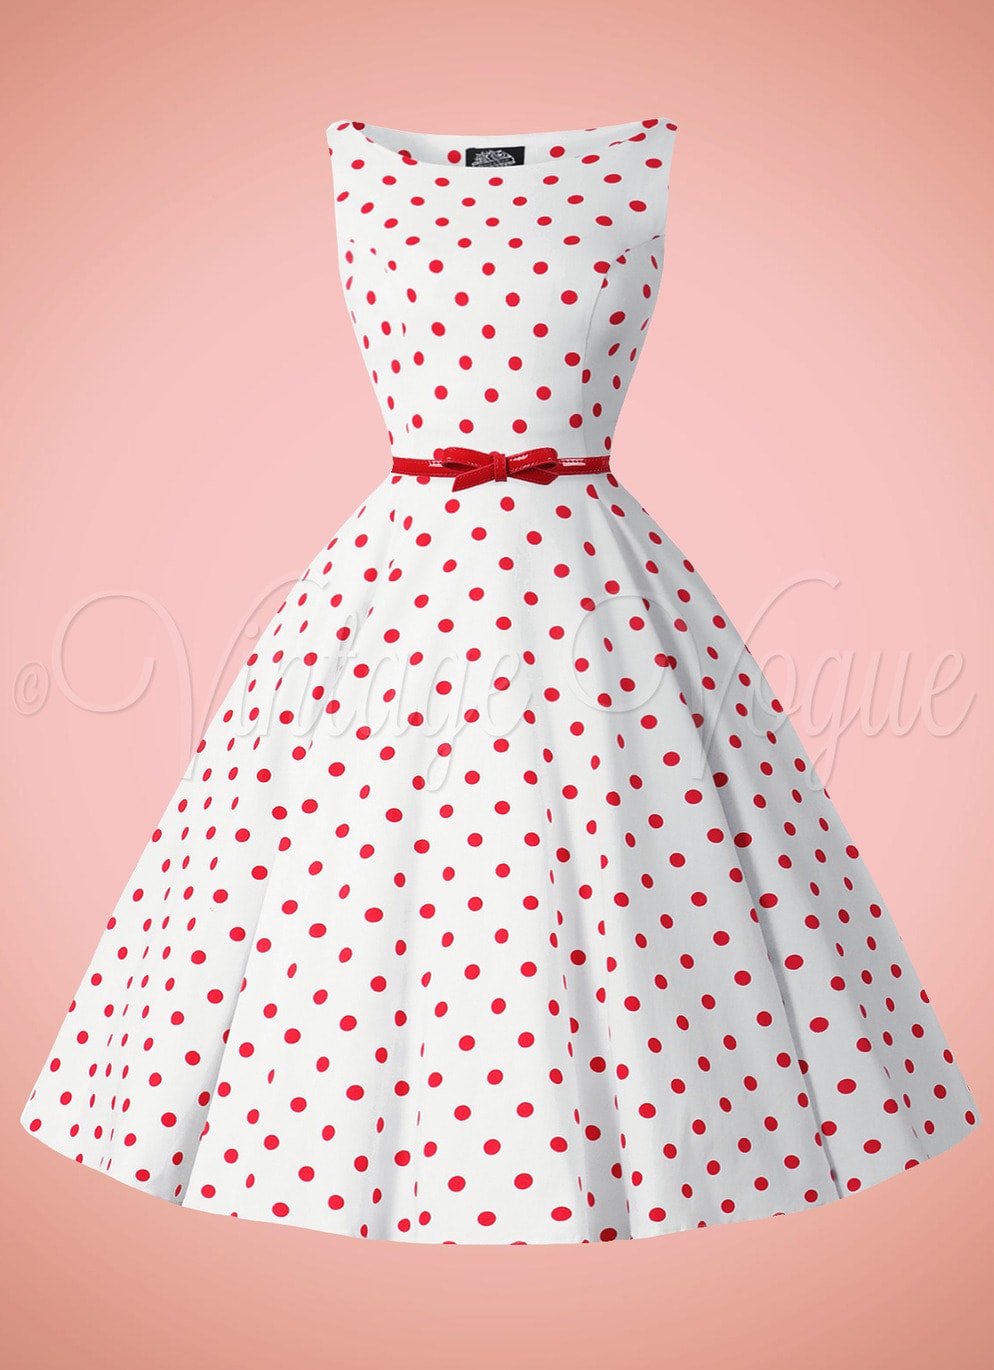 Hearts and Roses 50's Rockabilly Punkte Kleid Cindy Polka Dot Swing Dress in Weiß 50er Jahre Petticoat Damenkleid Jive Lindy Hop Punkte gepunktet tupfen